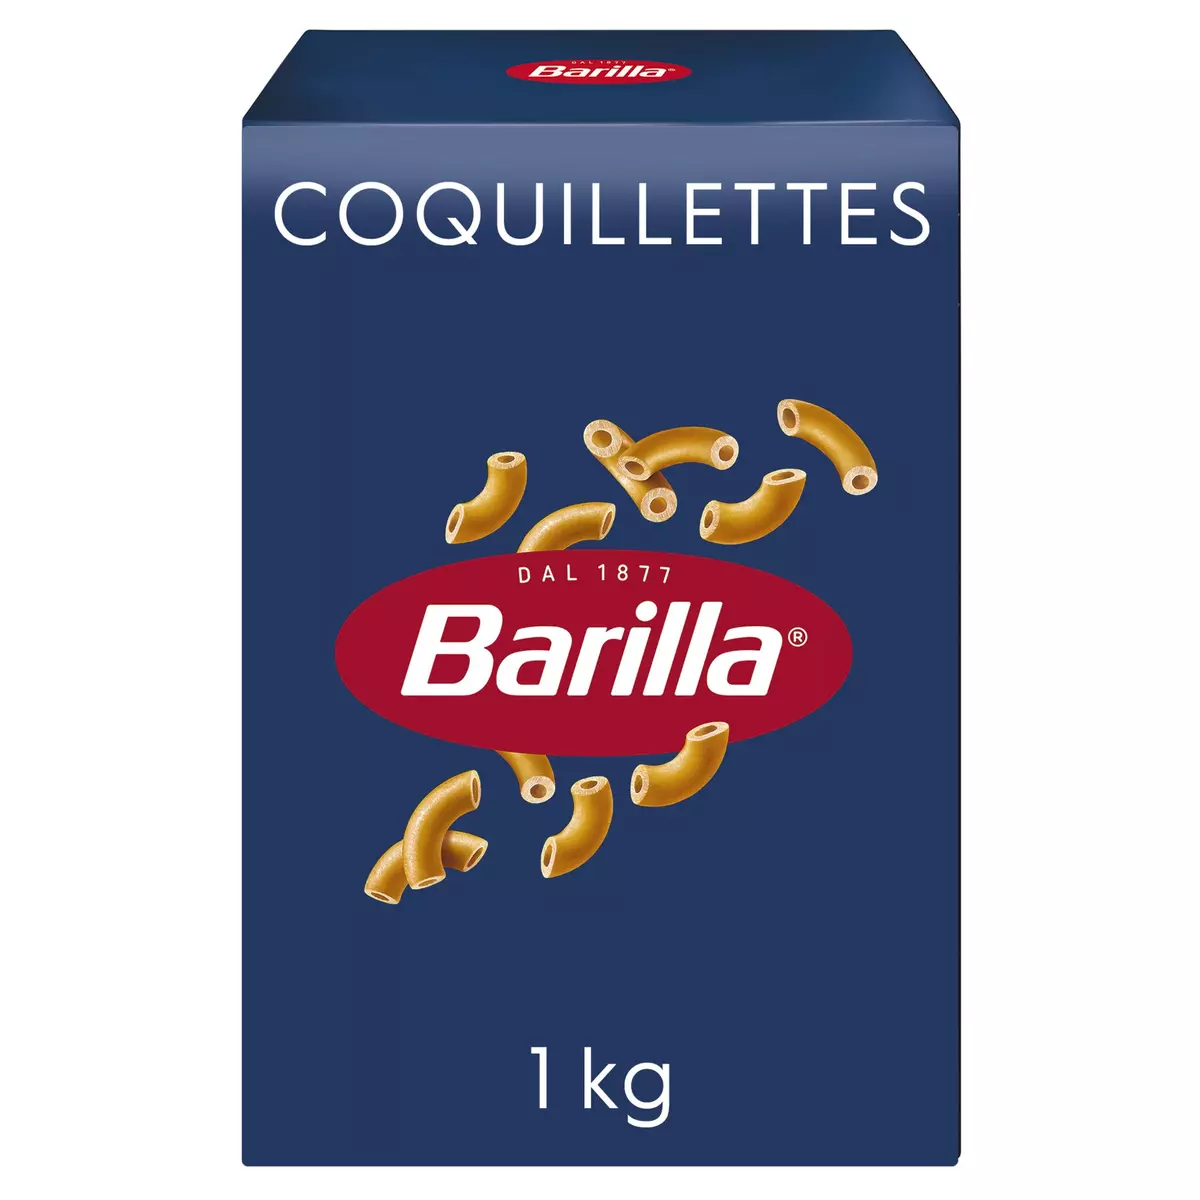 BARILLA Coquillettes 1kg